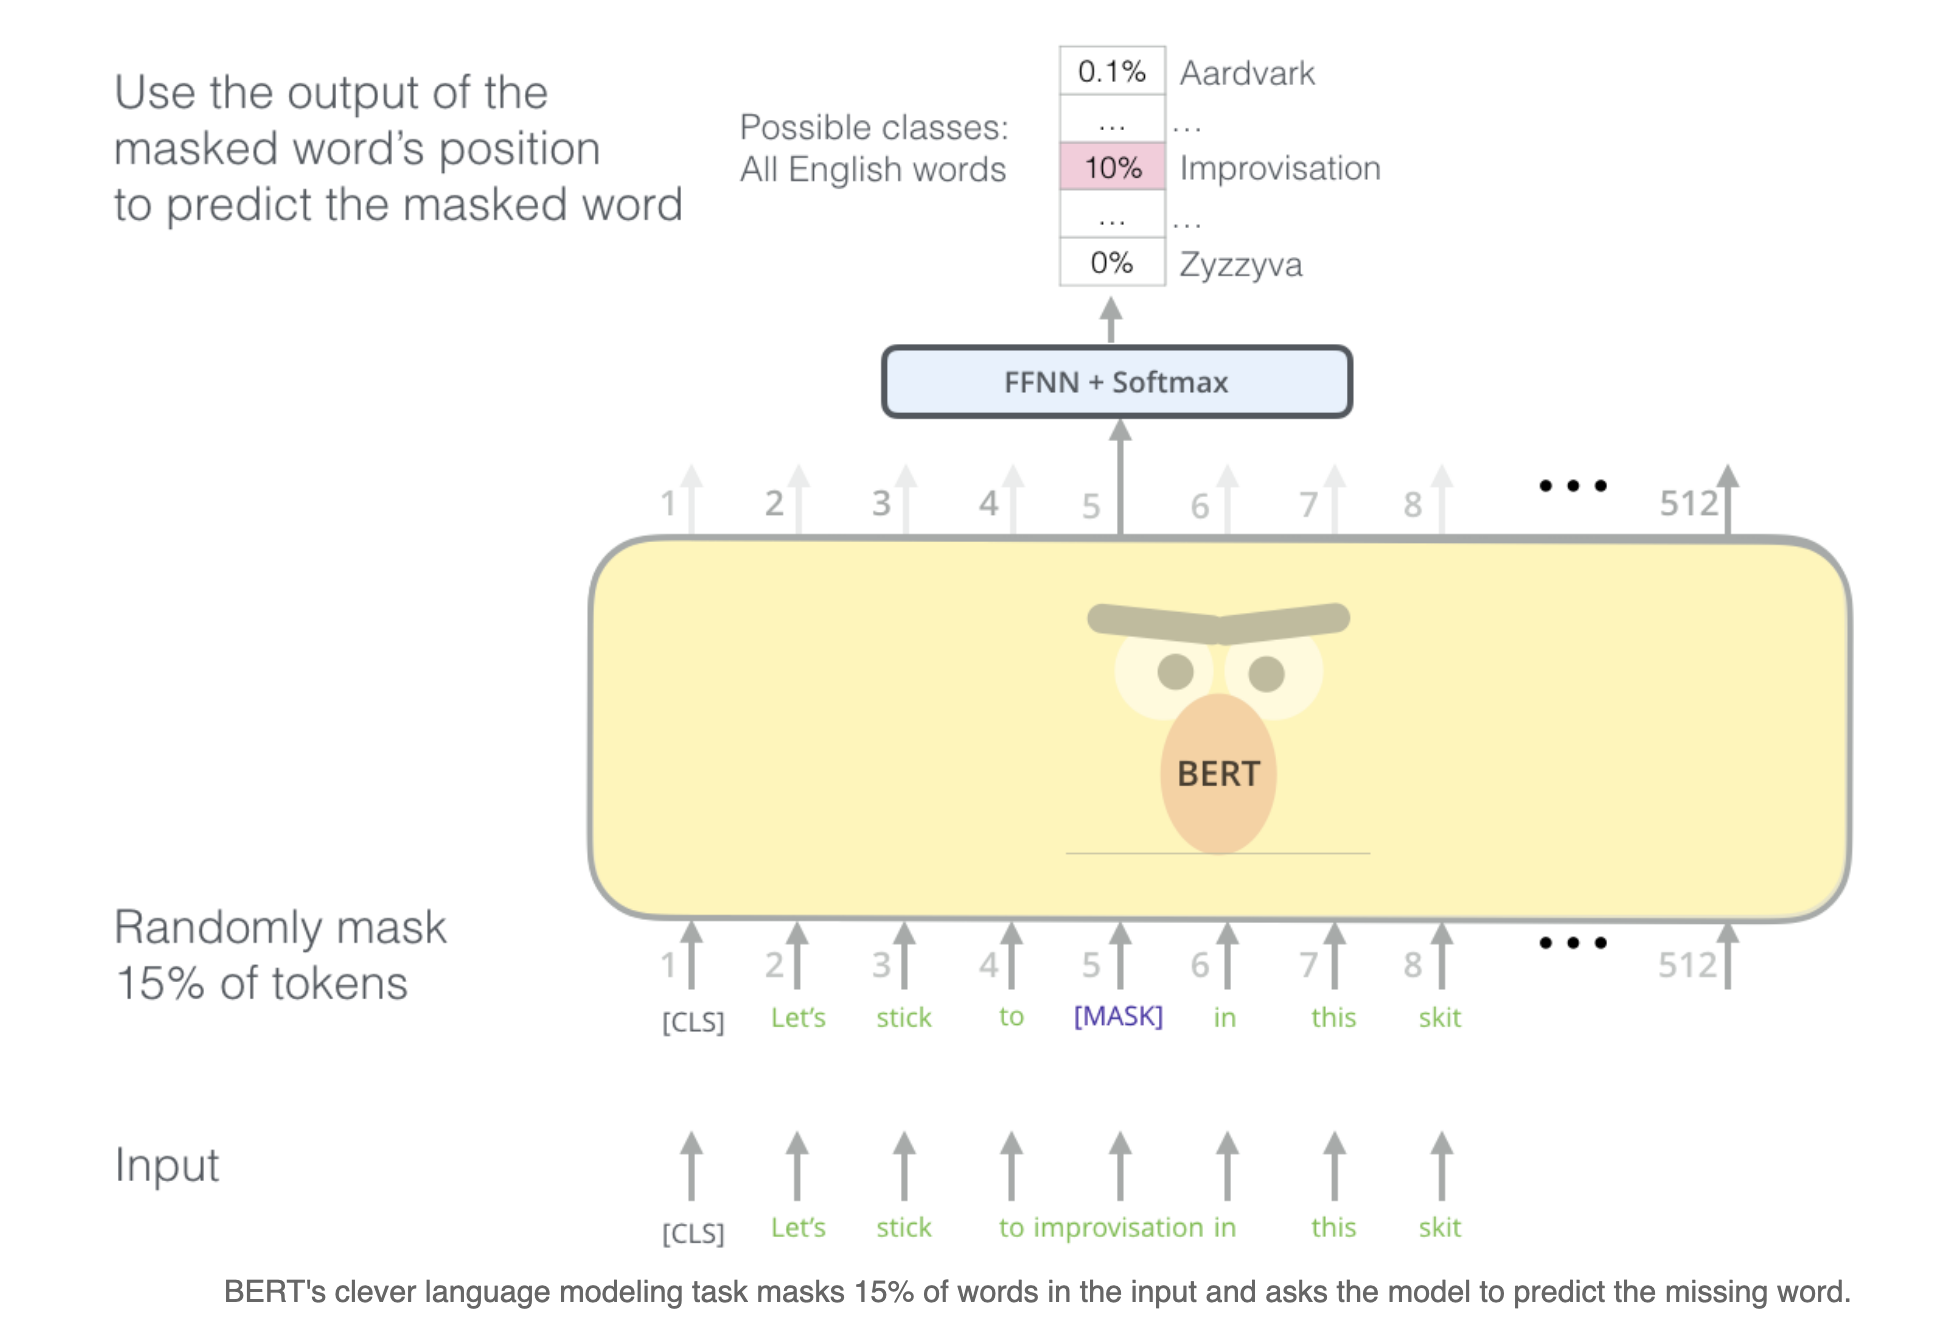 BERT Masked Language Model  
 Alammar, Jay (2018). The Illustrated BERT, ELMo, and co. [Blog post]. Retrieved from http://jalammar.github.io/illustrated-bert/